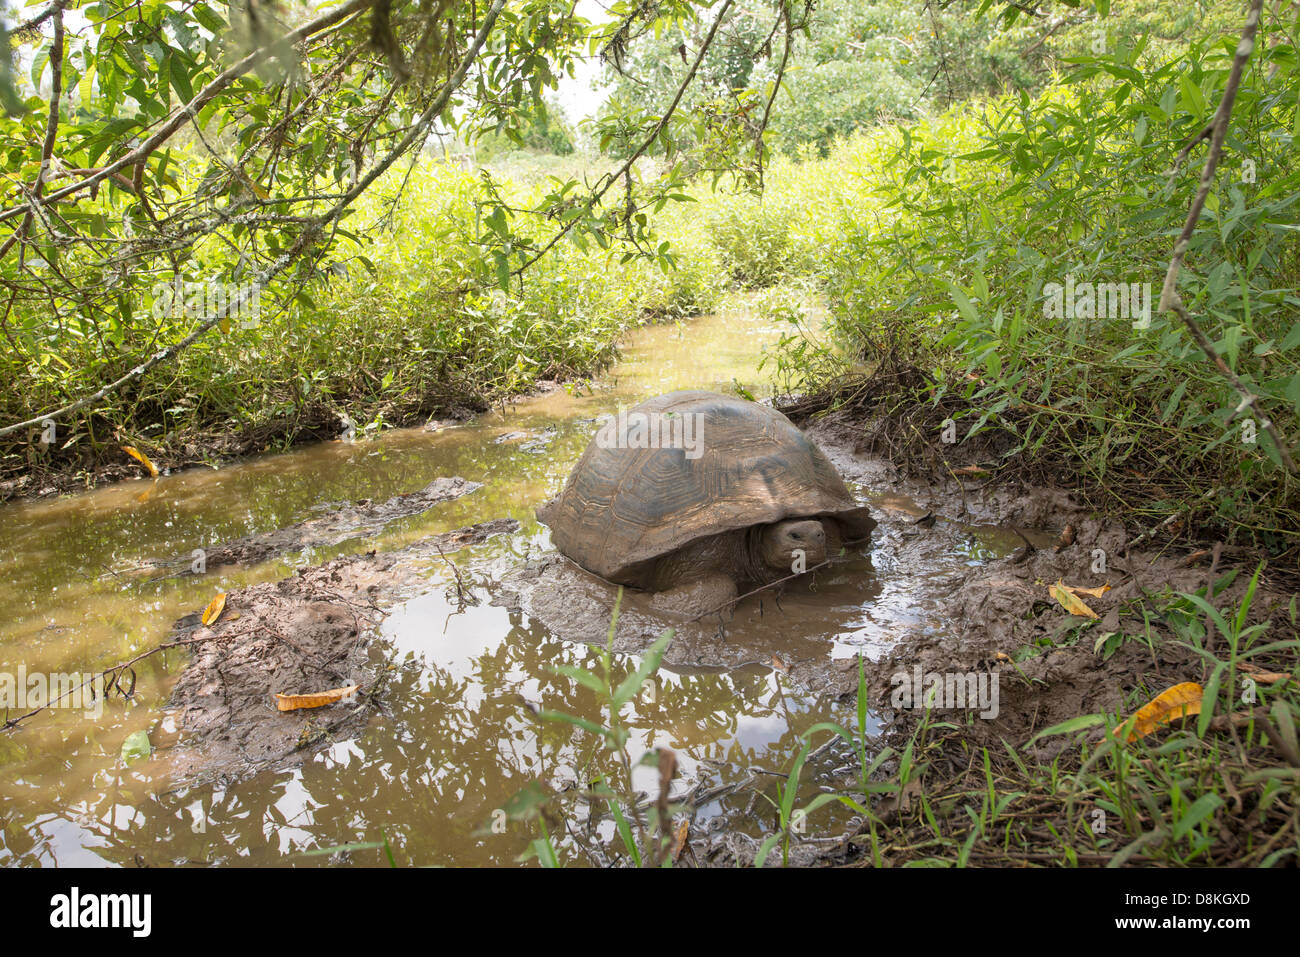 Stock photo of a galapagos giant tortoise in the Santa Cruz highlands. Stock Photo